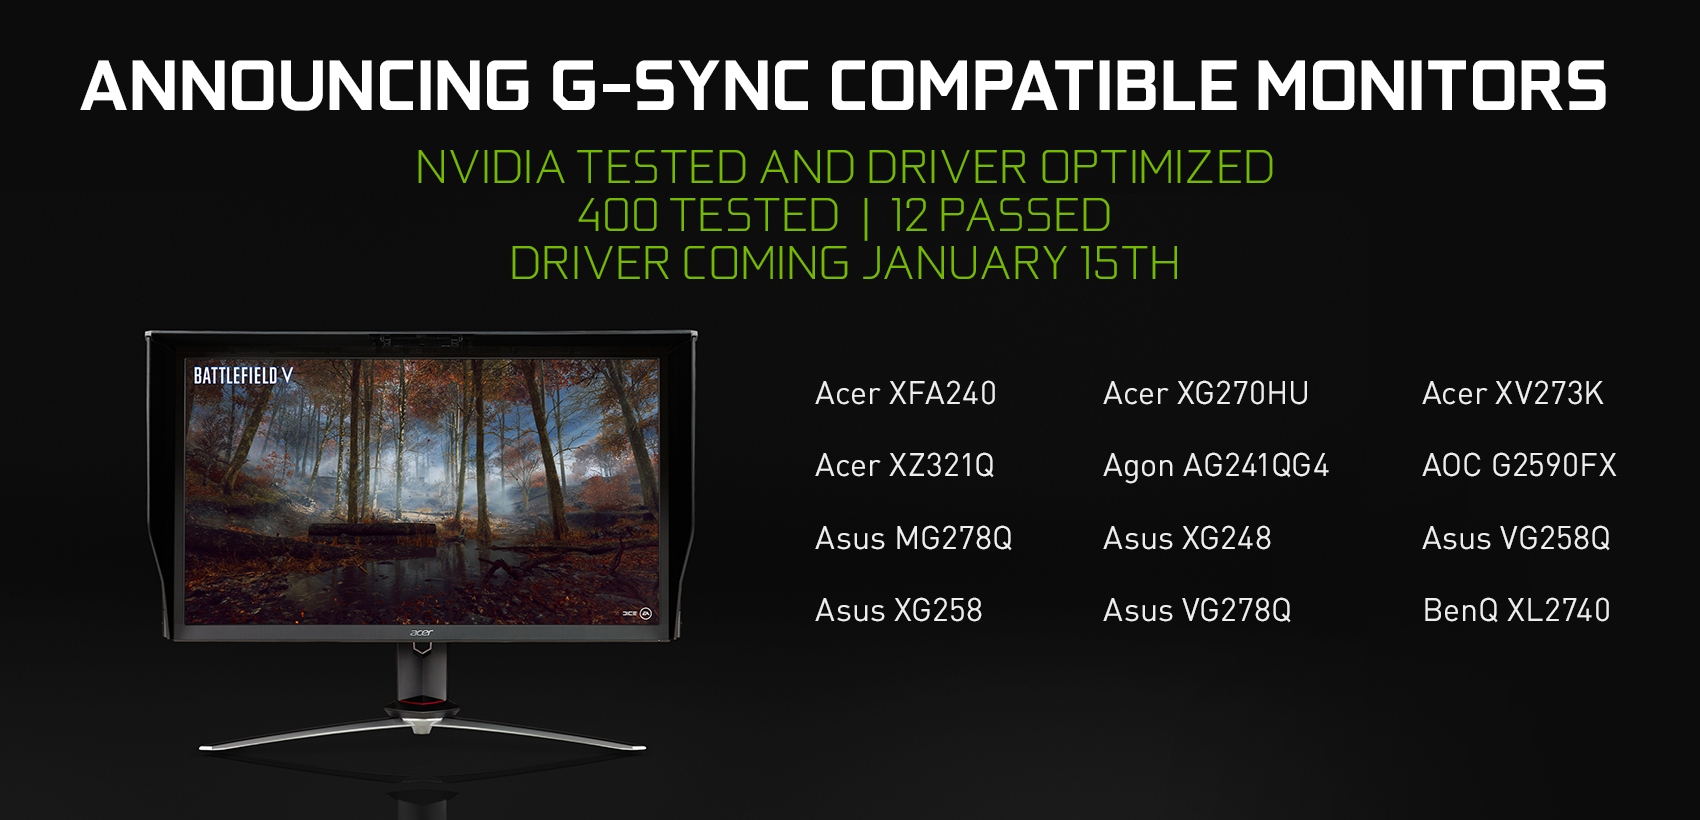 nvidia-g-sync-compatible-monitors-850@2x.jpg